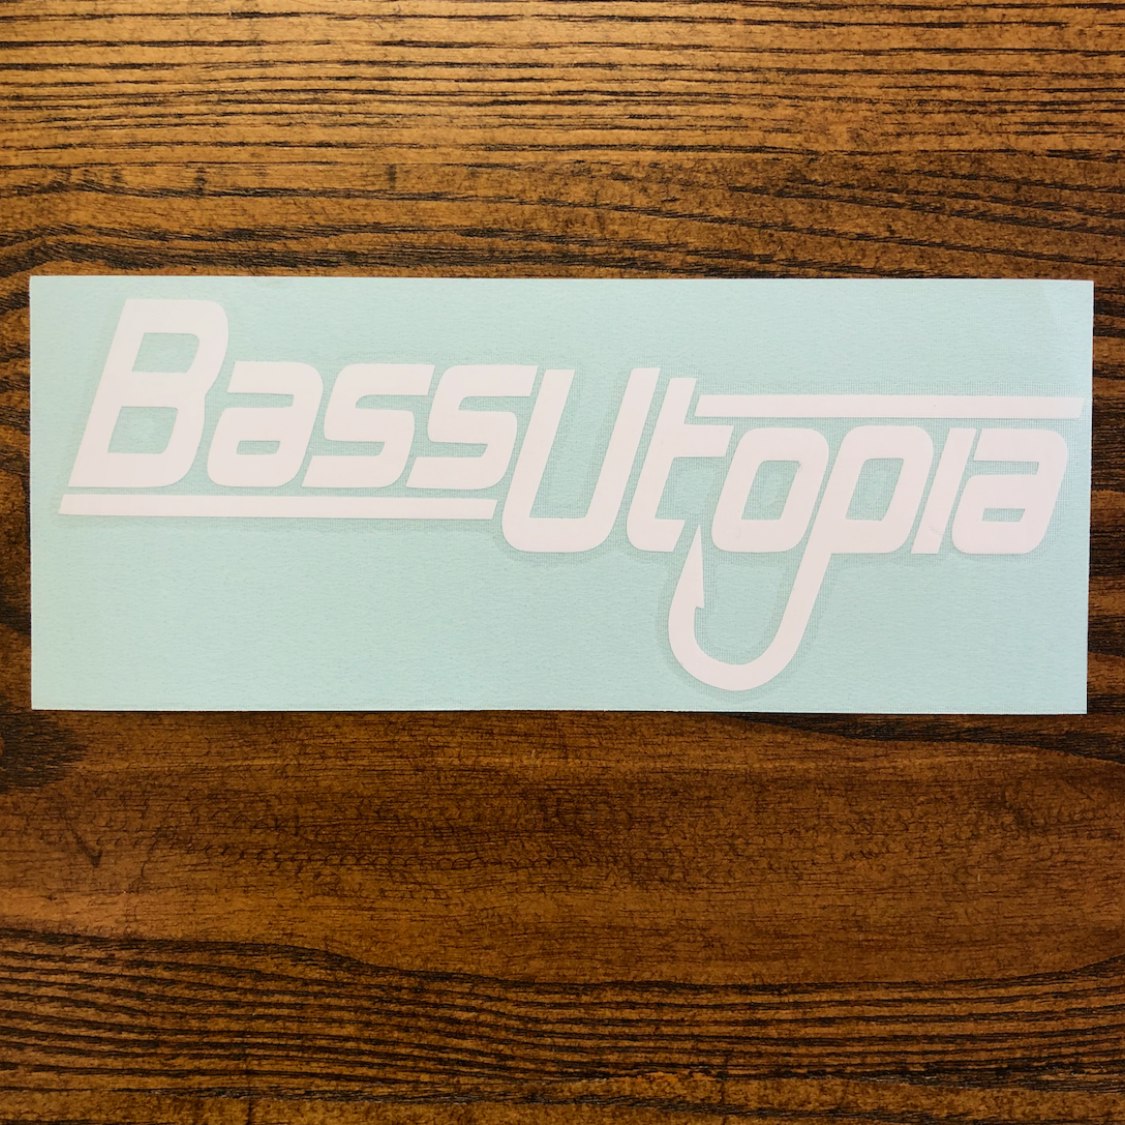 Bass Utopia Sticker